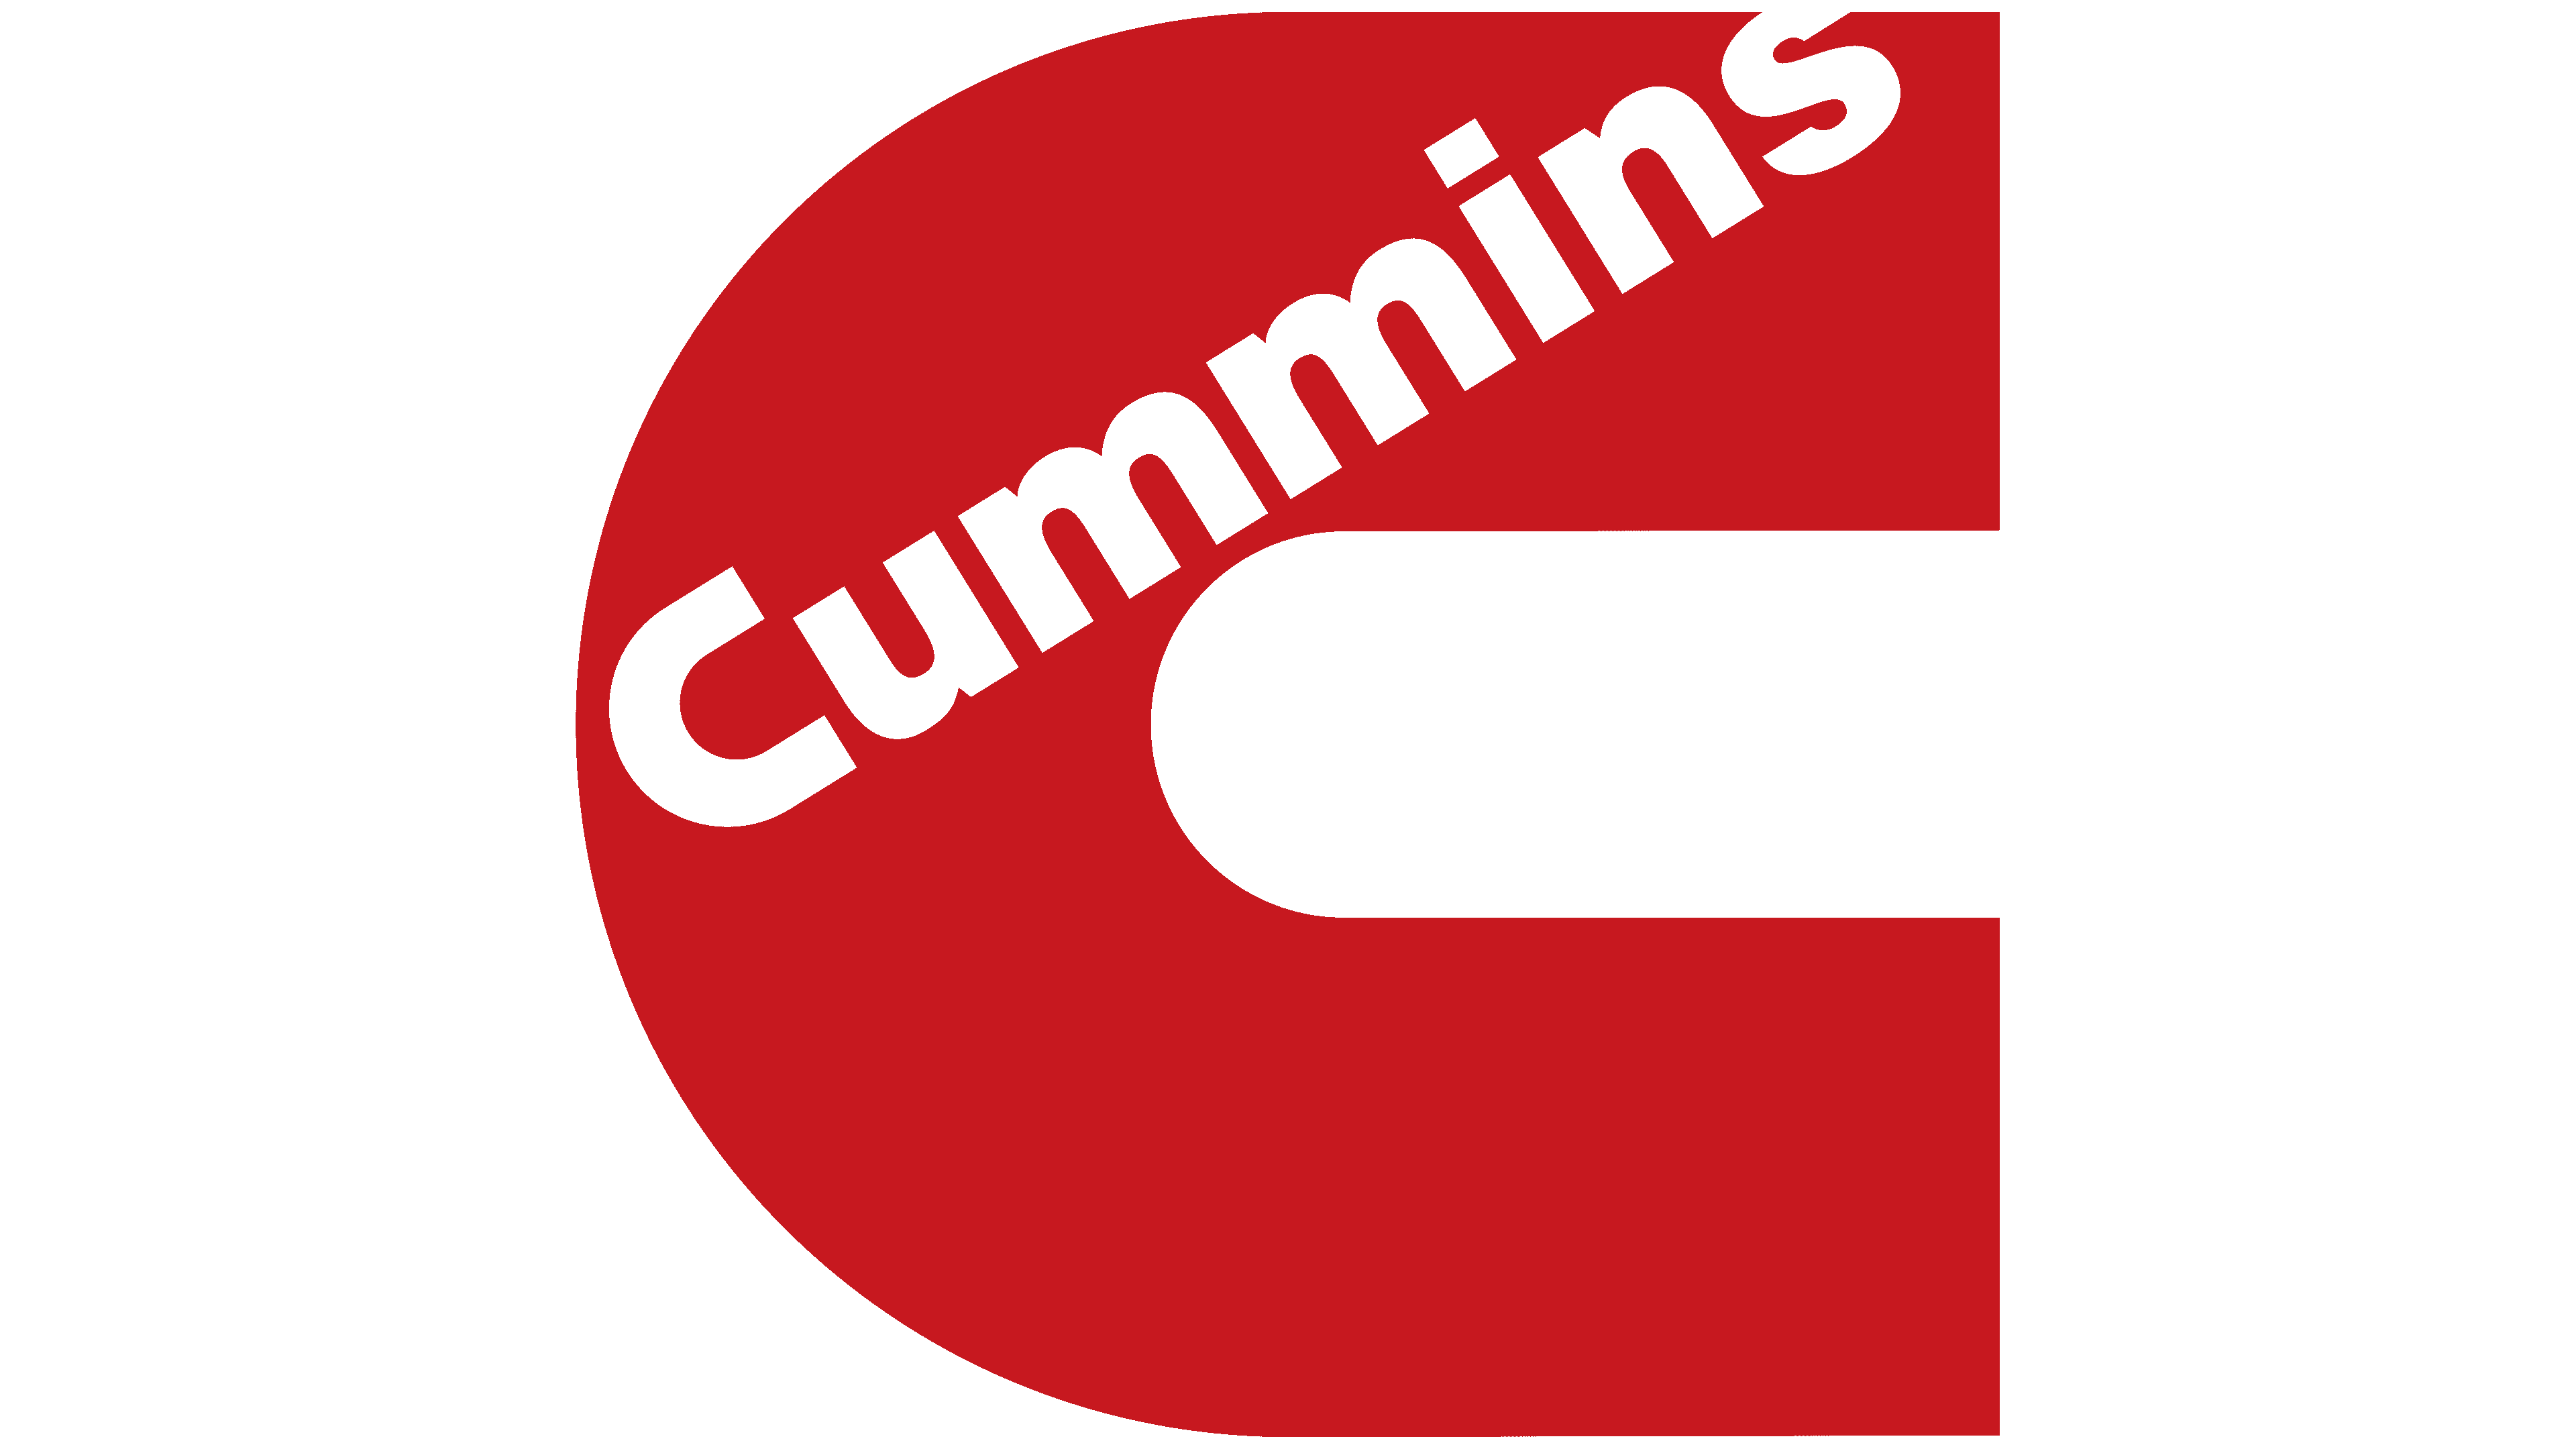 Cummins Inc logo